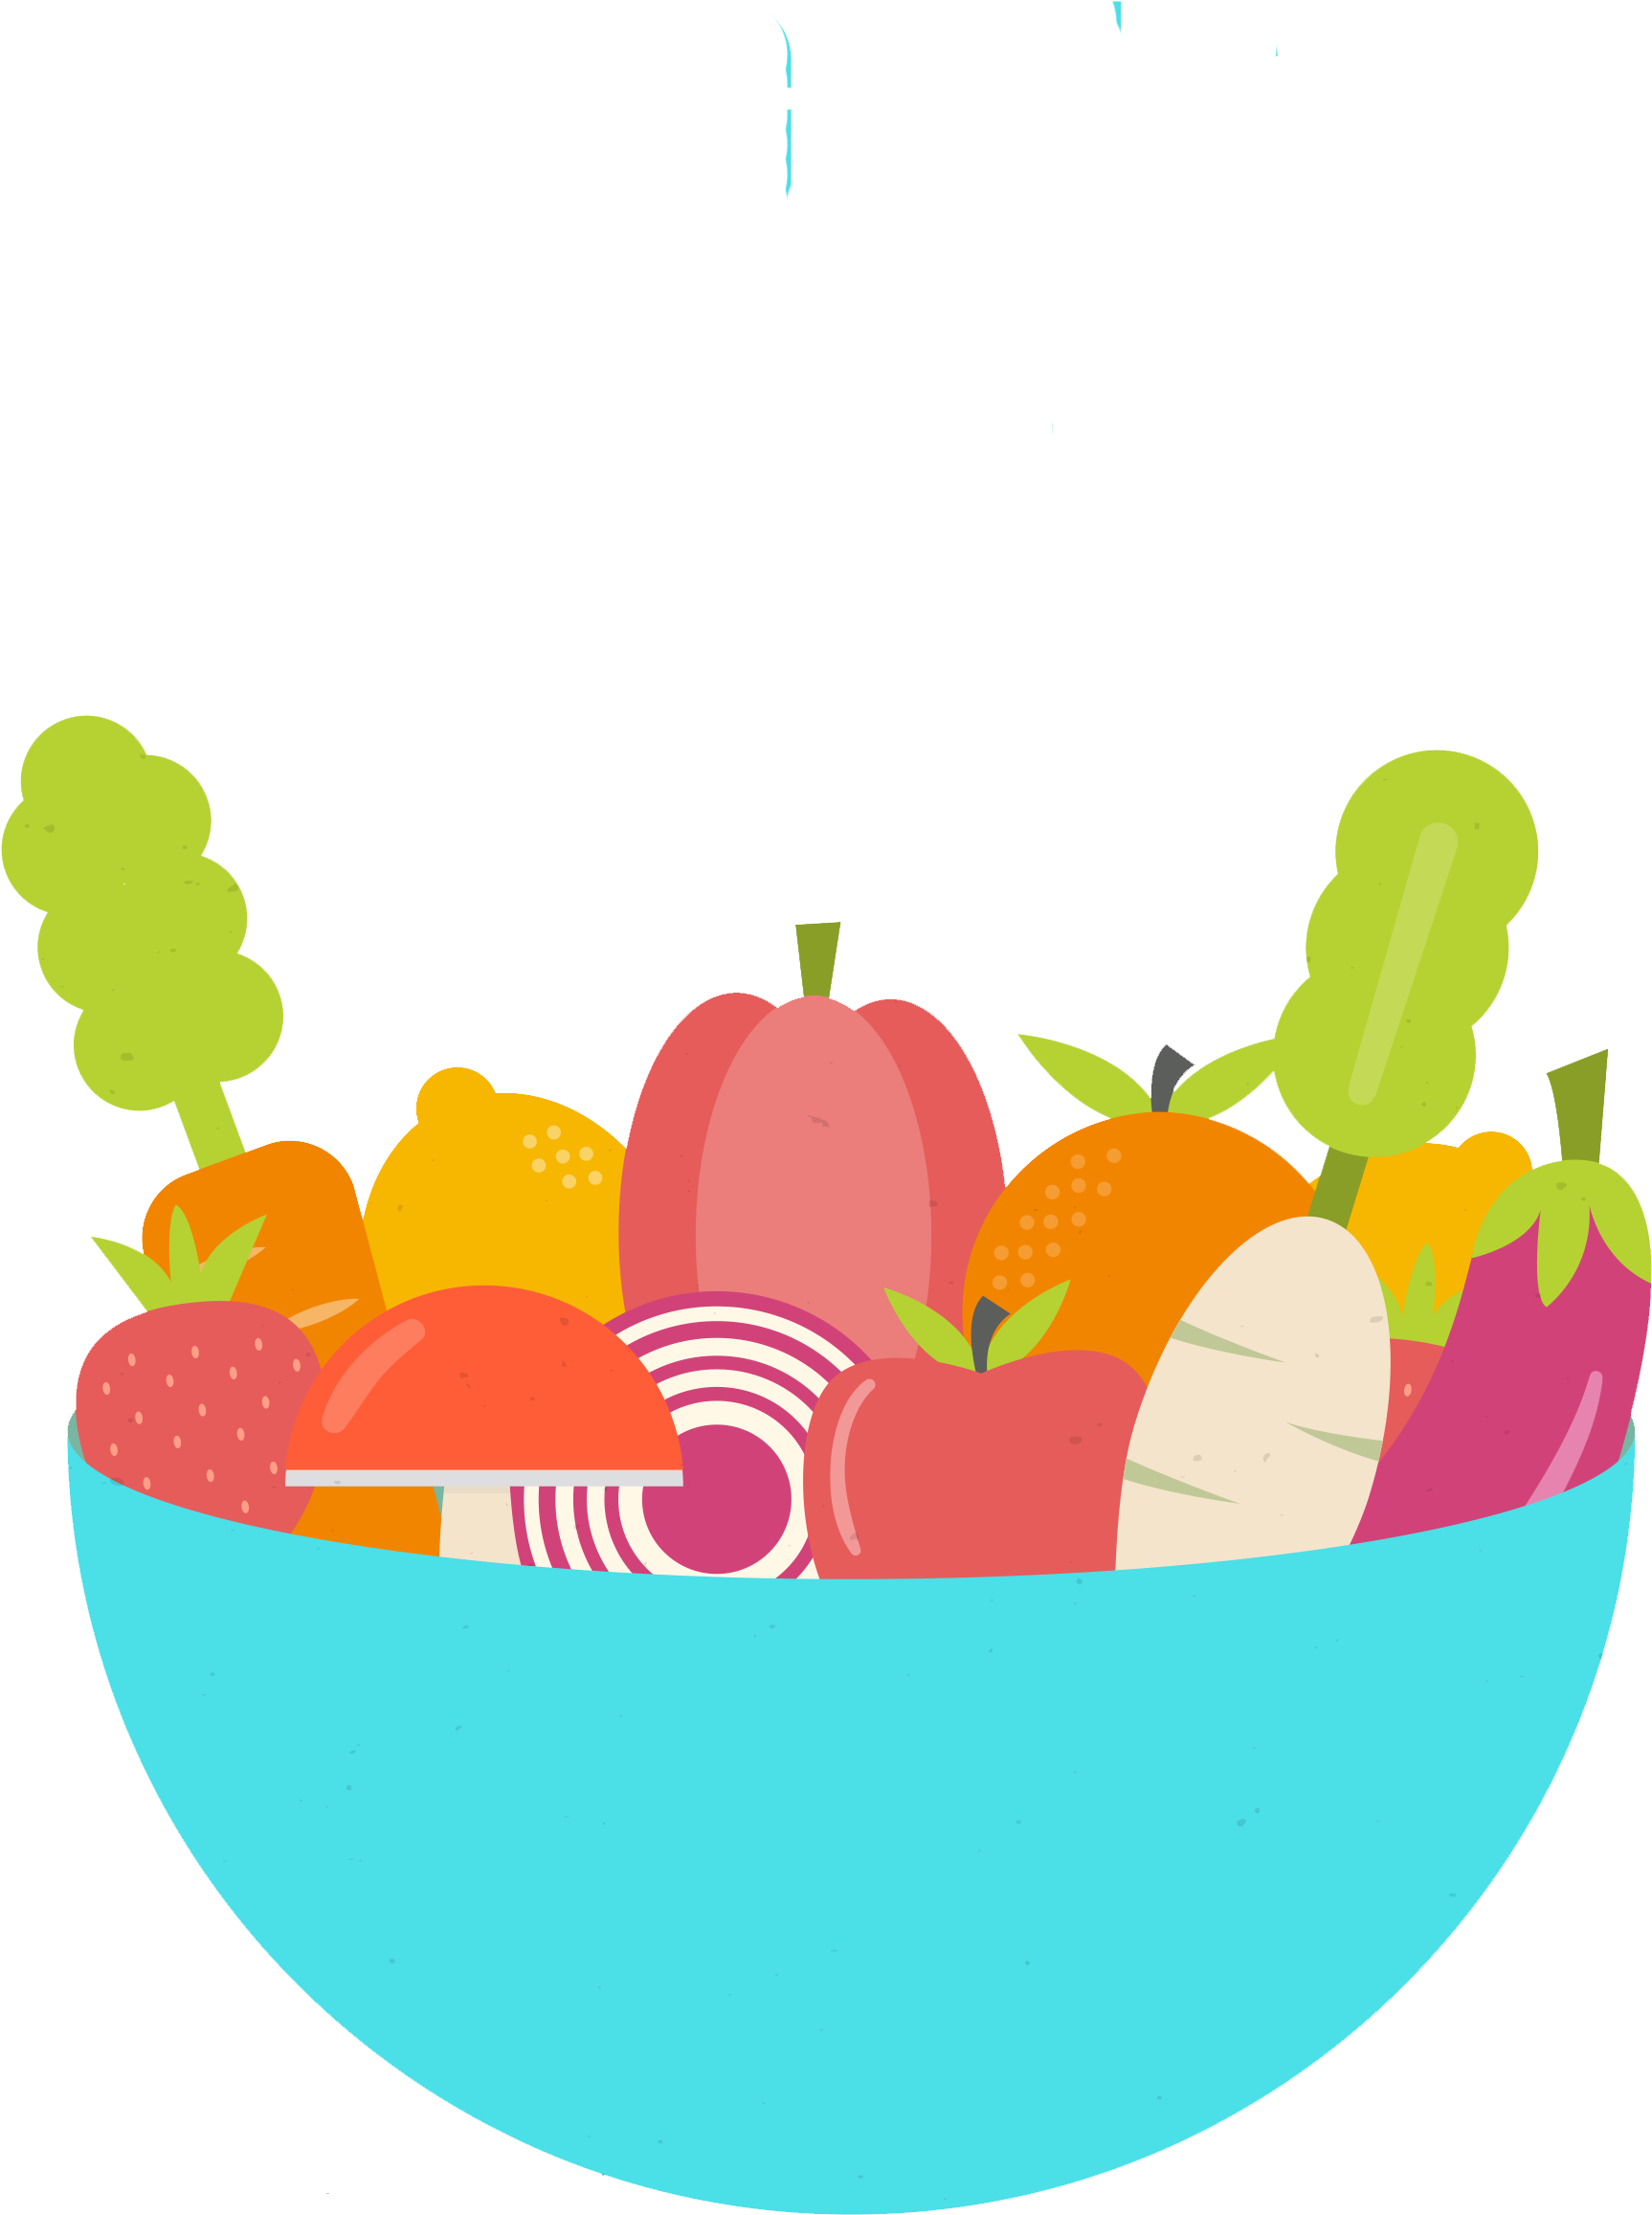 Fruit Vegetable Bowl Illustration - Fruit Vegetable Bowl Illustration (3333x3333)